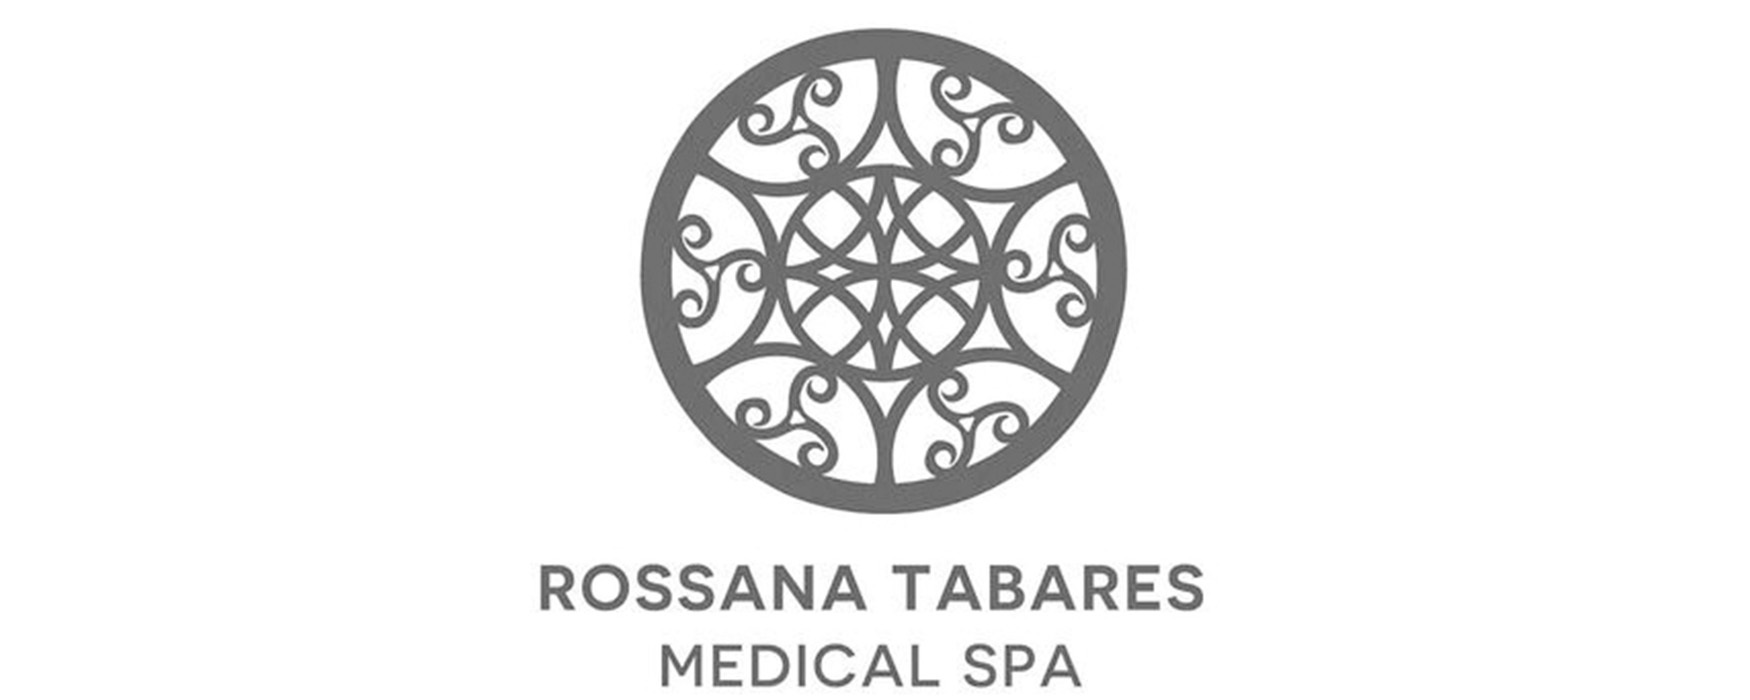 Rossana Tabares Medical Spa